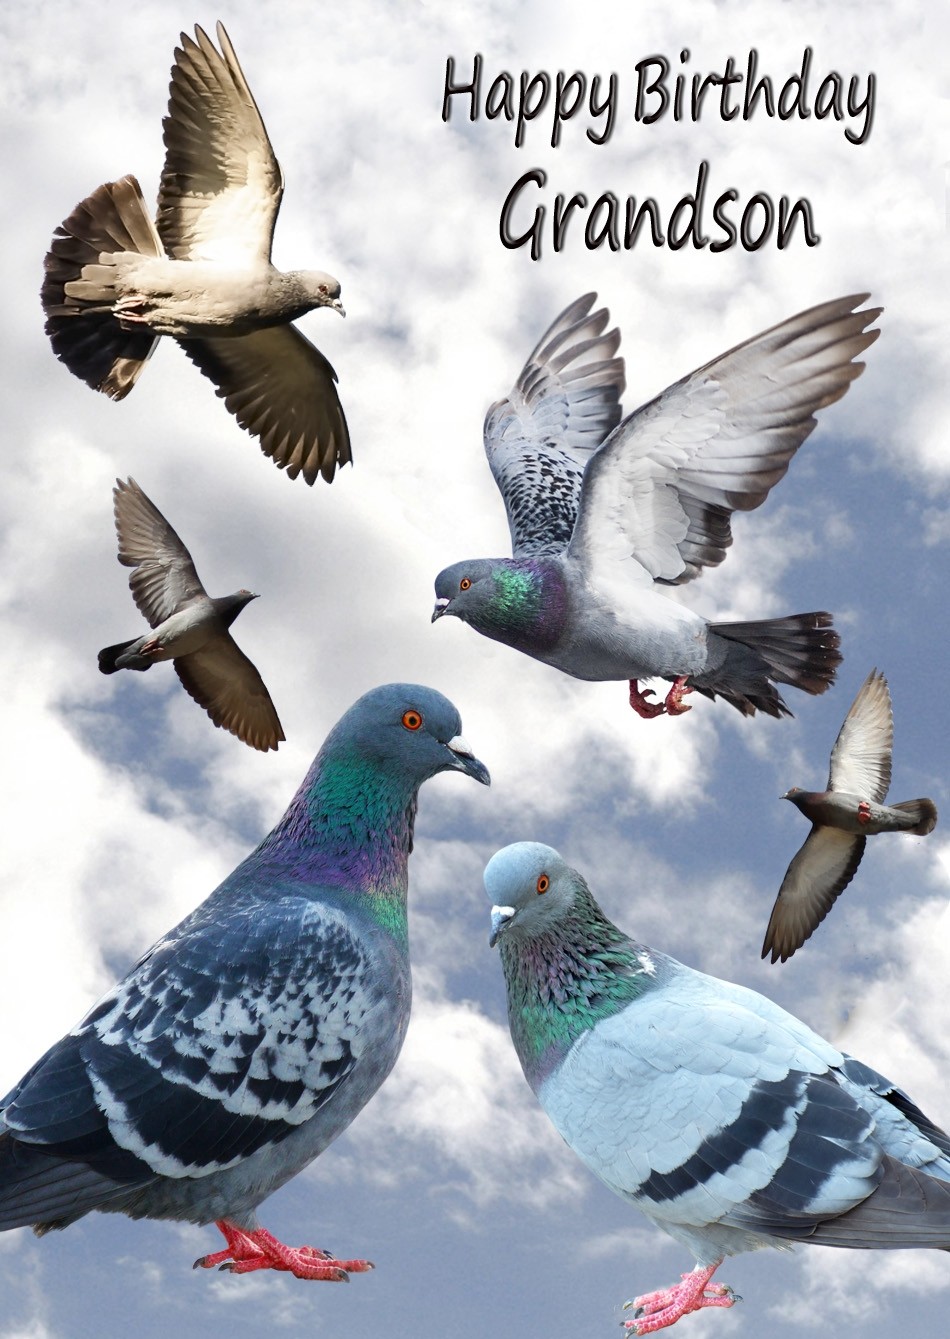 Racing Homing Pigeon Grandson Birthday Card